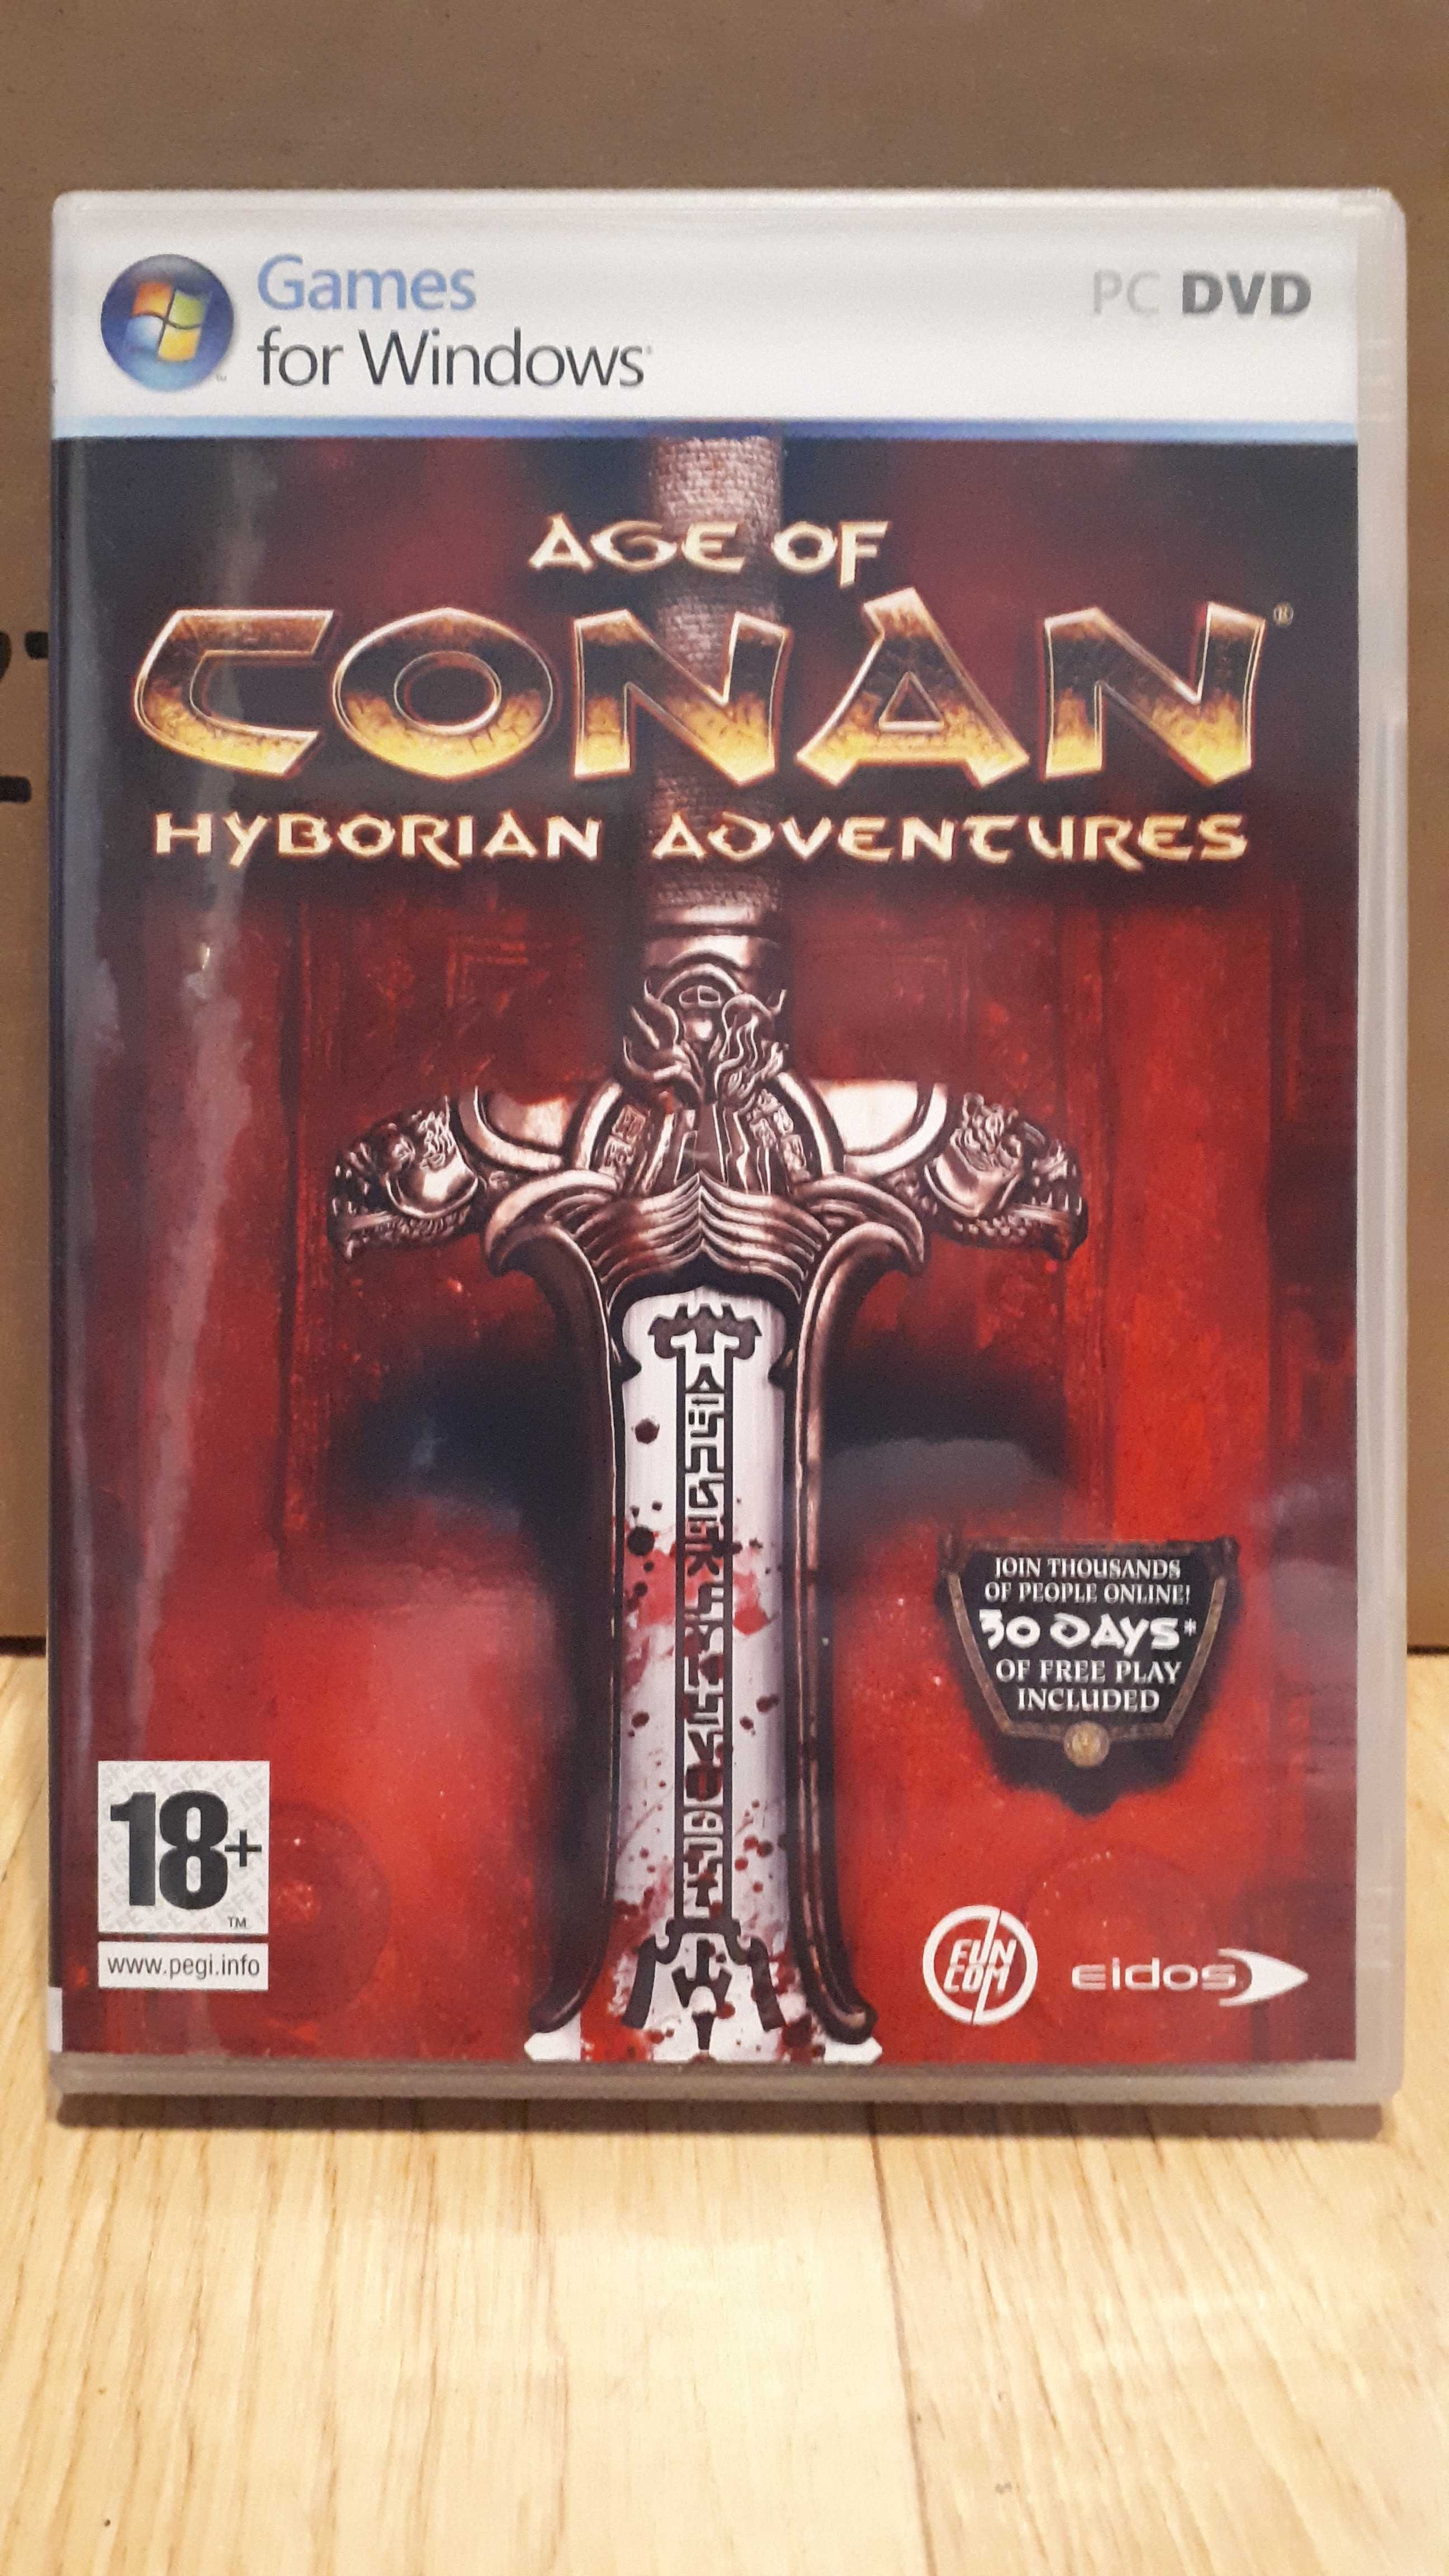 Age of Conan " hyborian adventures